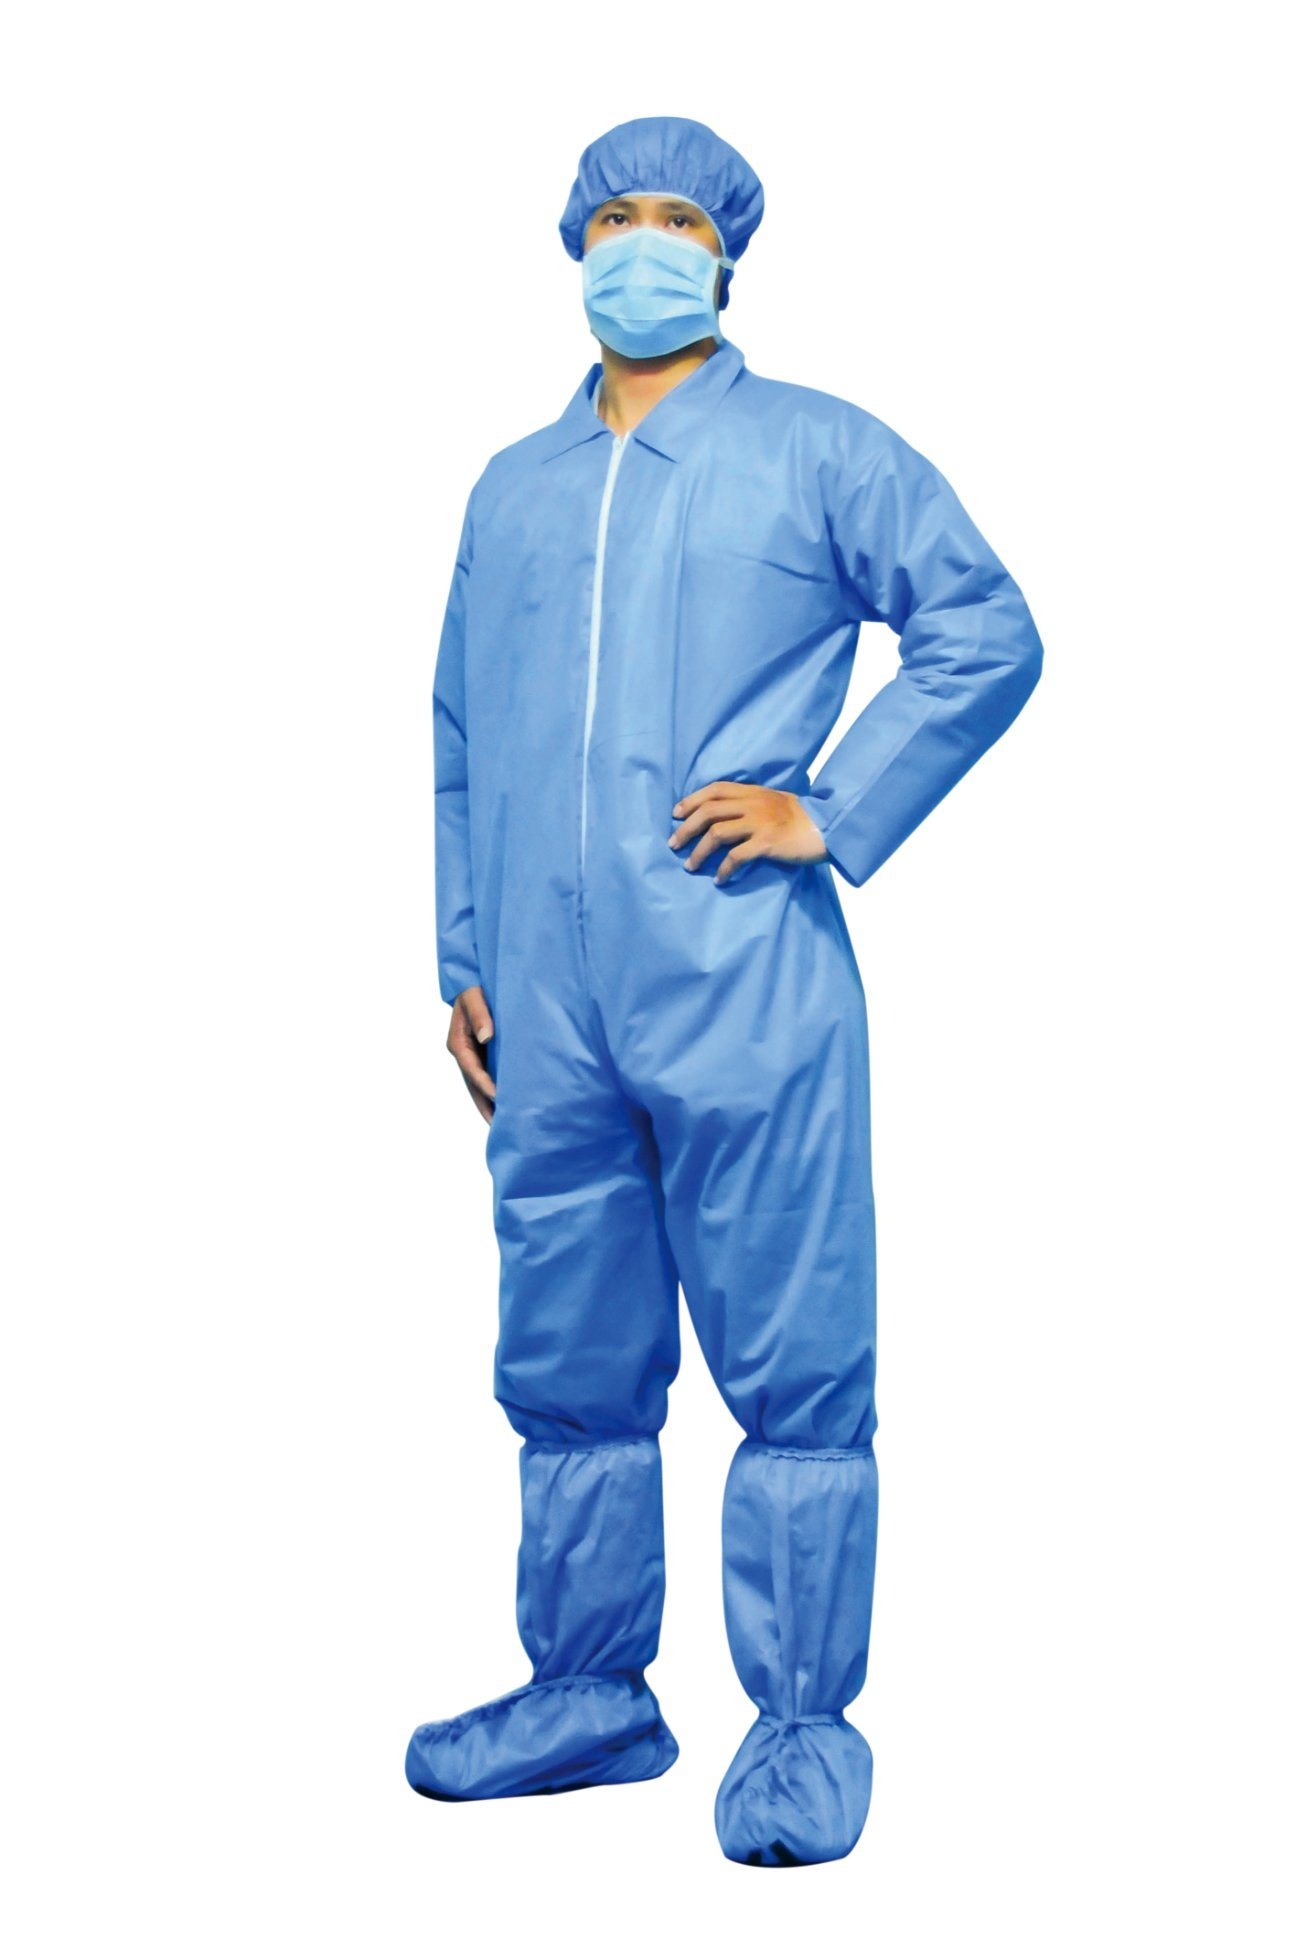 Medical Protective Cloth 100%Virgin Polypropylene Spunbond Nonwoven Fabric Roll Customized 8-200GSM TNT Non Woven Fabric